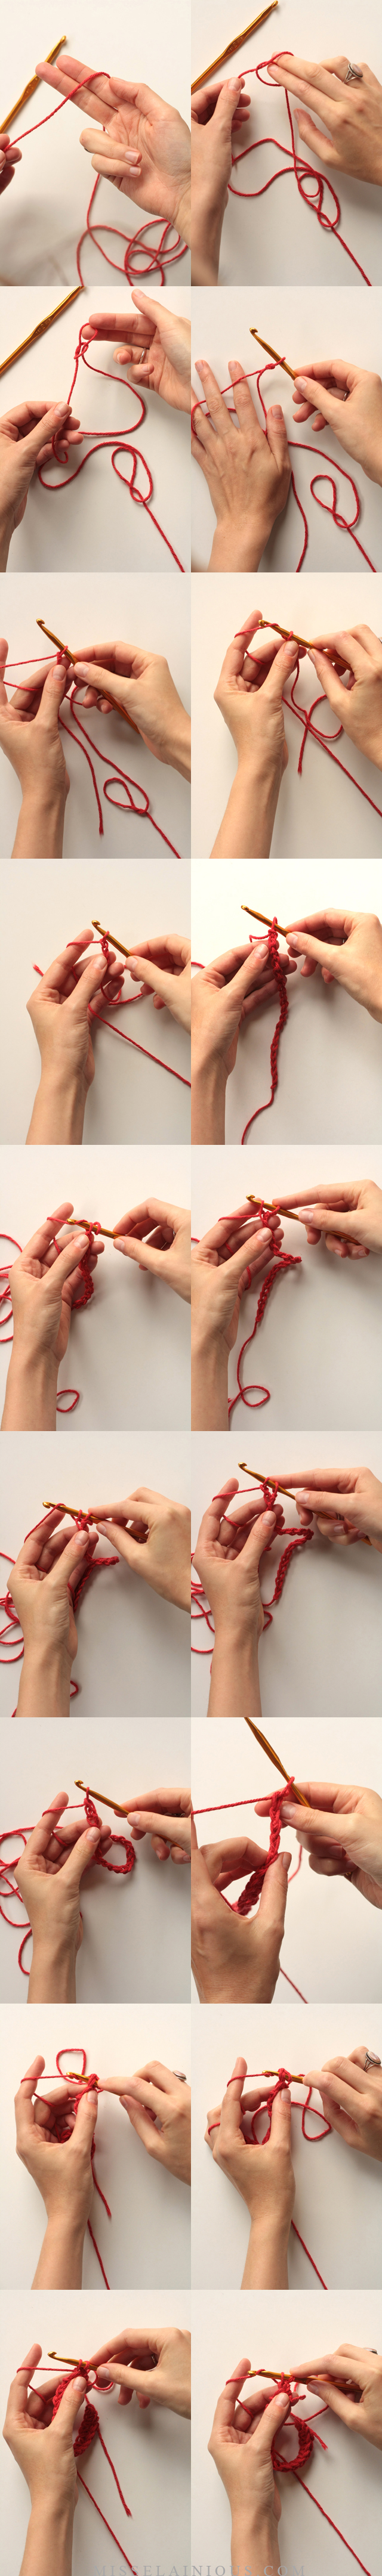 DIY crochet cotton washcloth | Misselainious blog